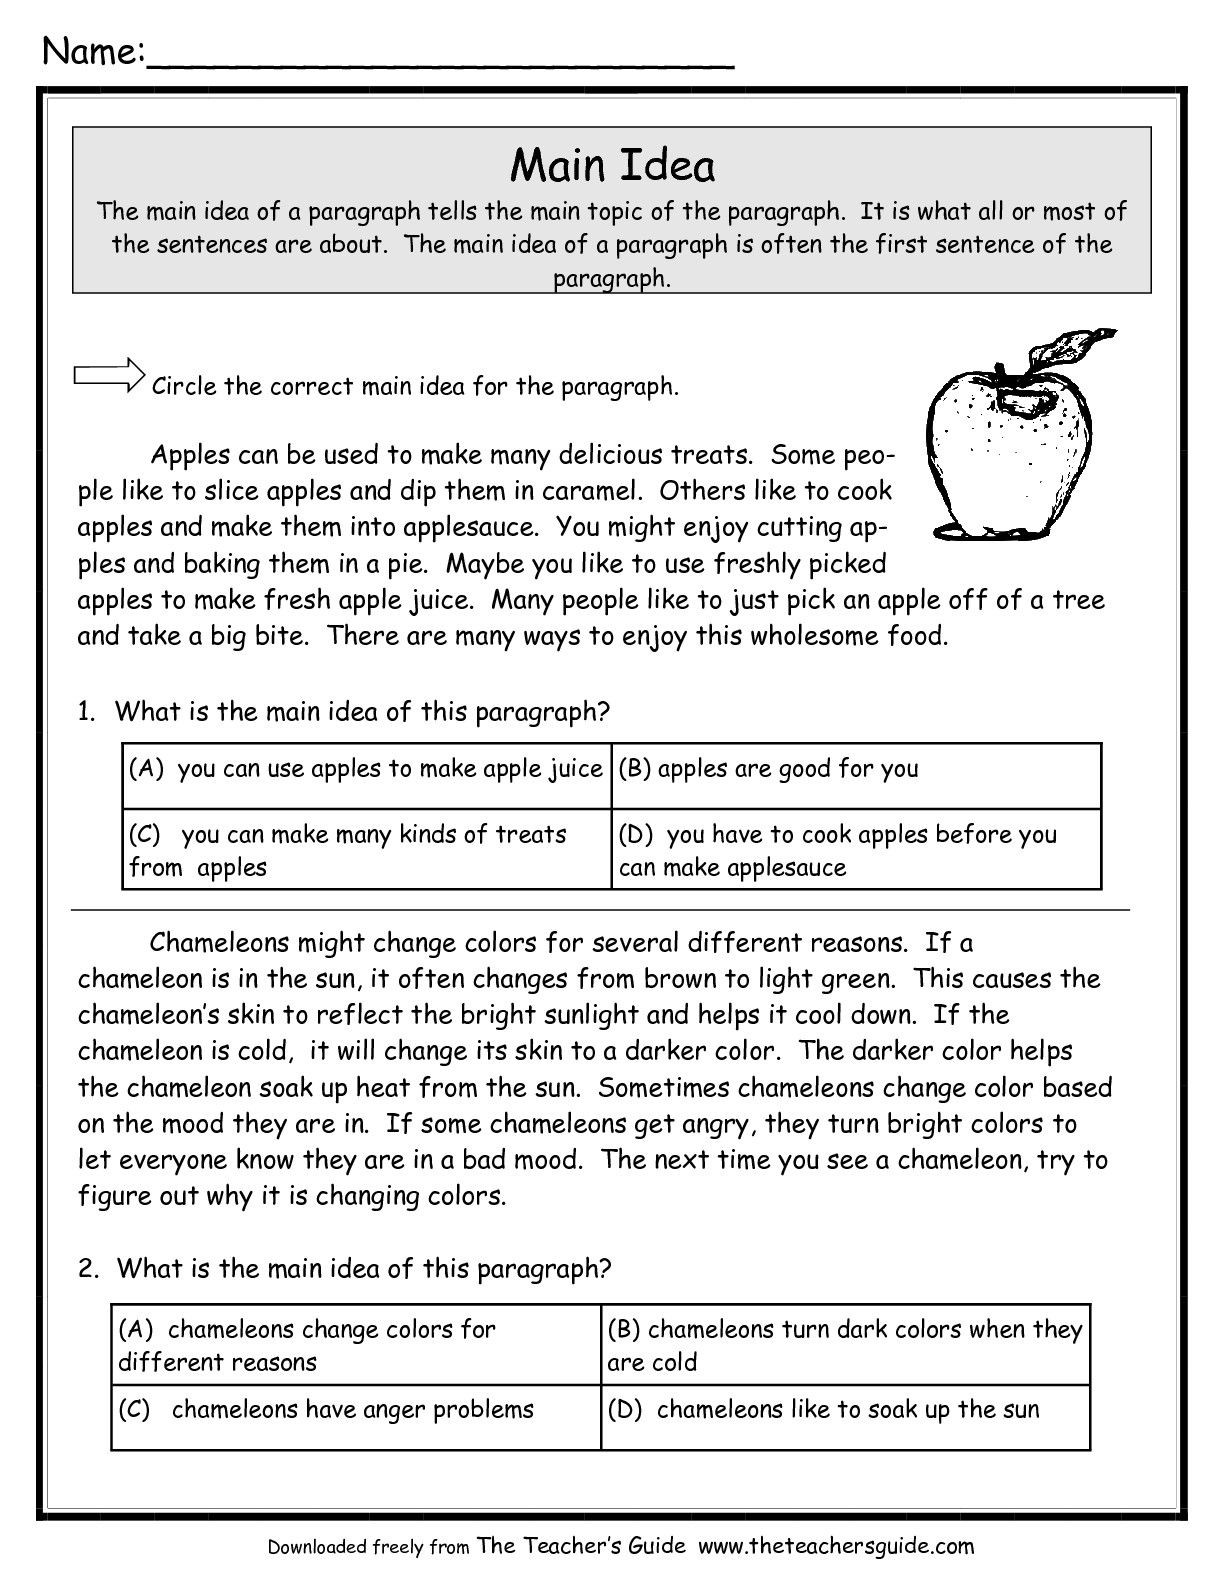 Main Idea 2nd Grade Worksheet Main Idea Worksheets From the Teacher S